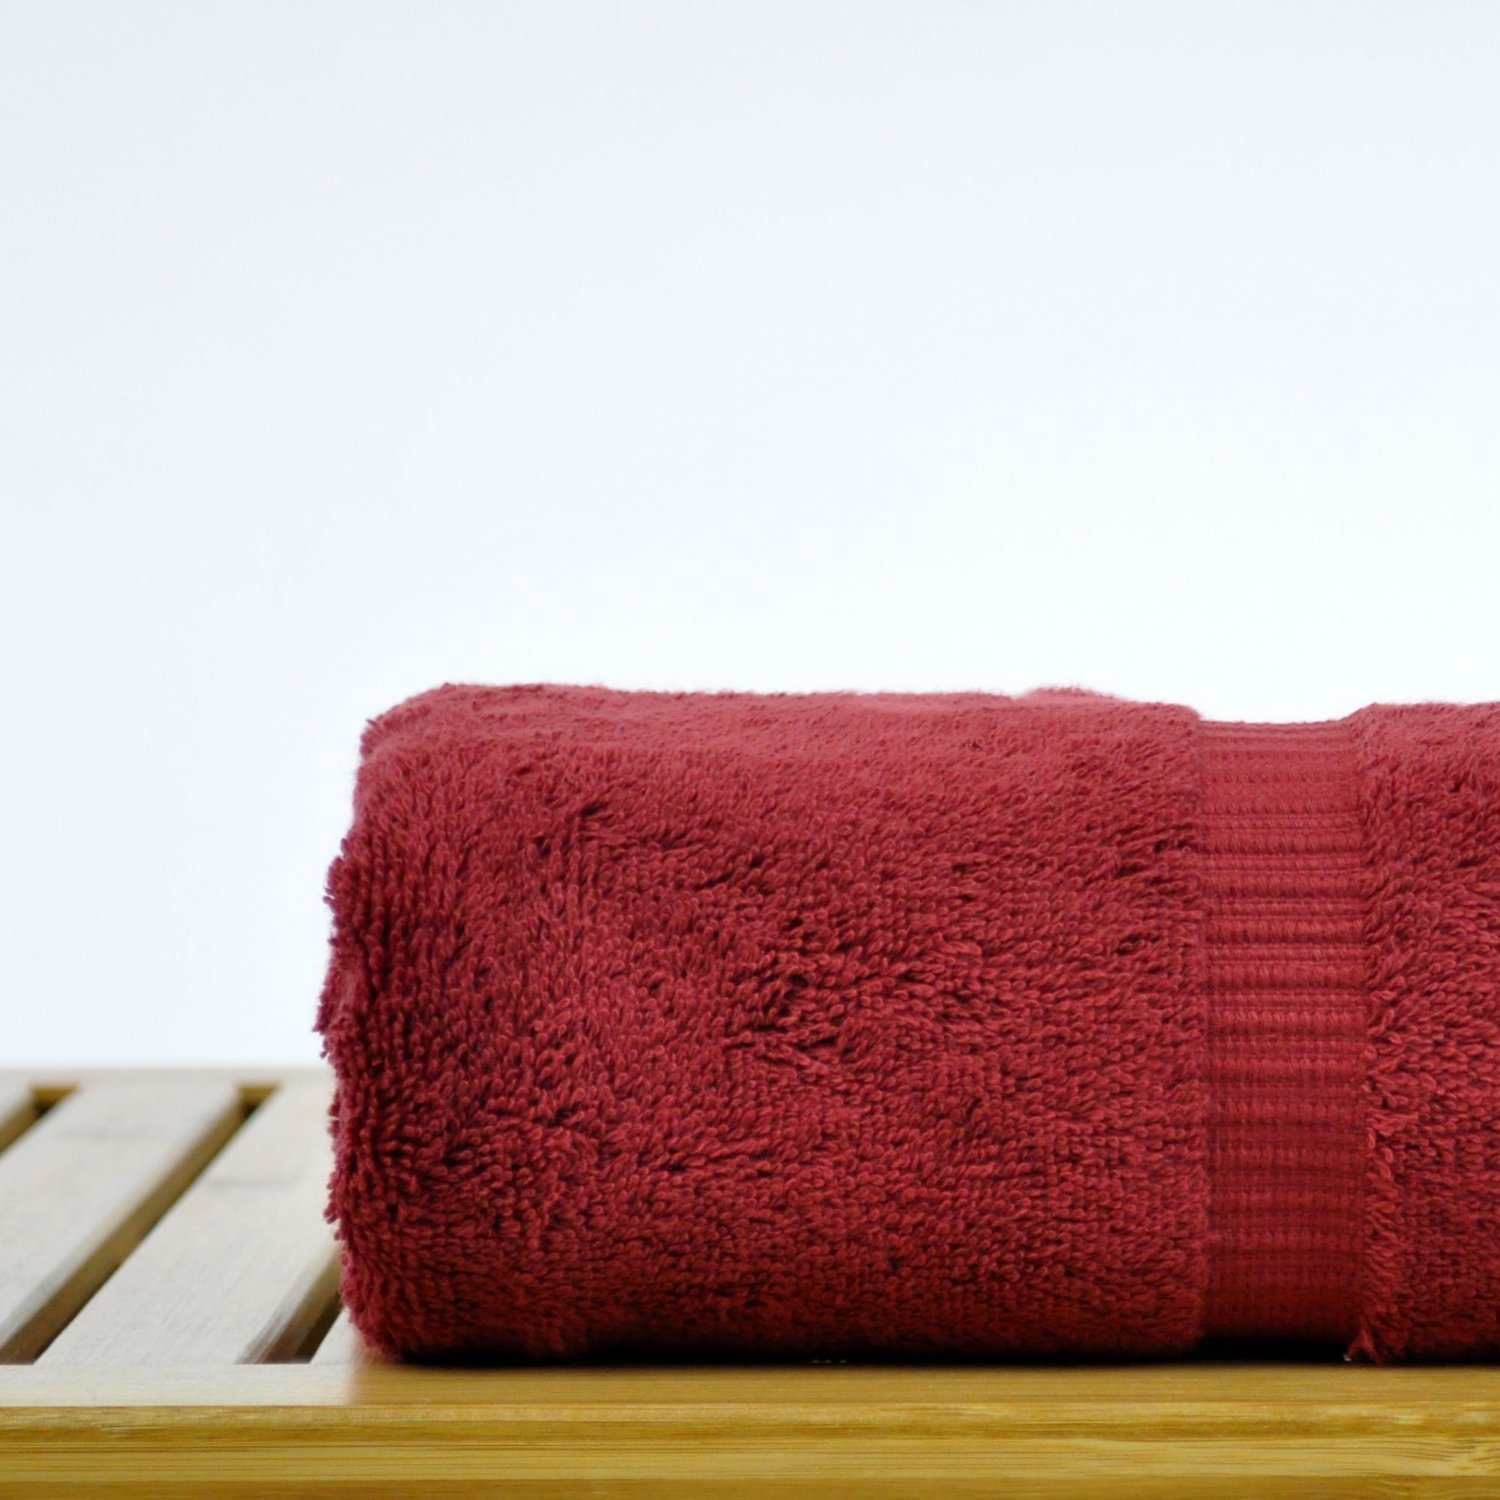 16" x 30" - 5.5 lbs/doz - %100 Turkish Cotton Cranberry Hand Towel - Dobby Border-Robemart.com